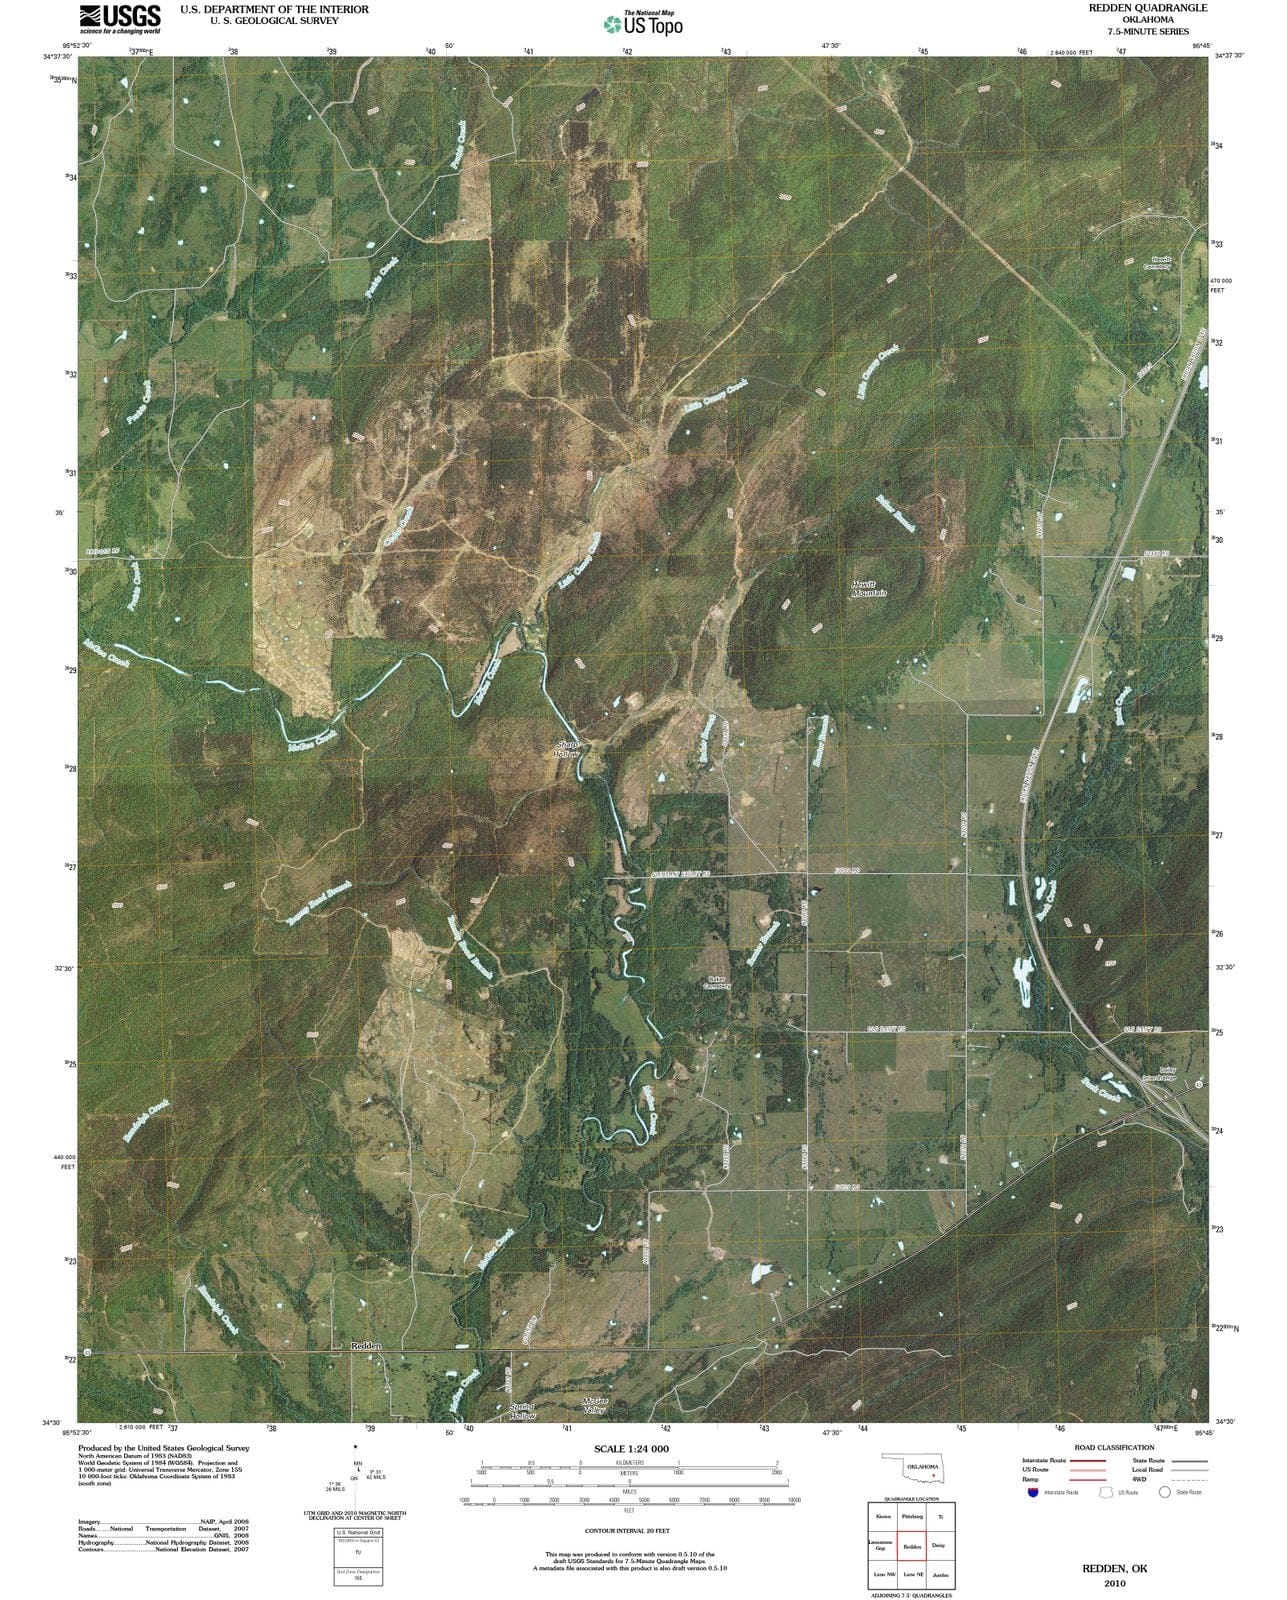 2010 Redden, OK - Oklahoma - USGS Topographic Map